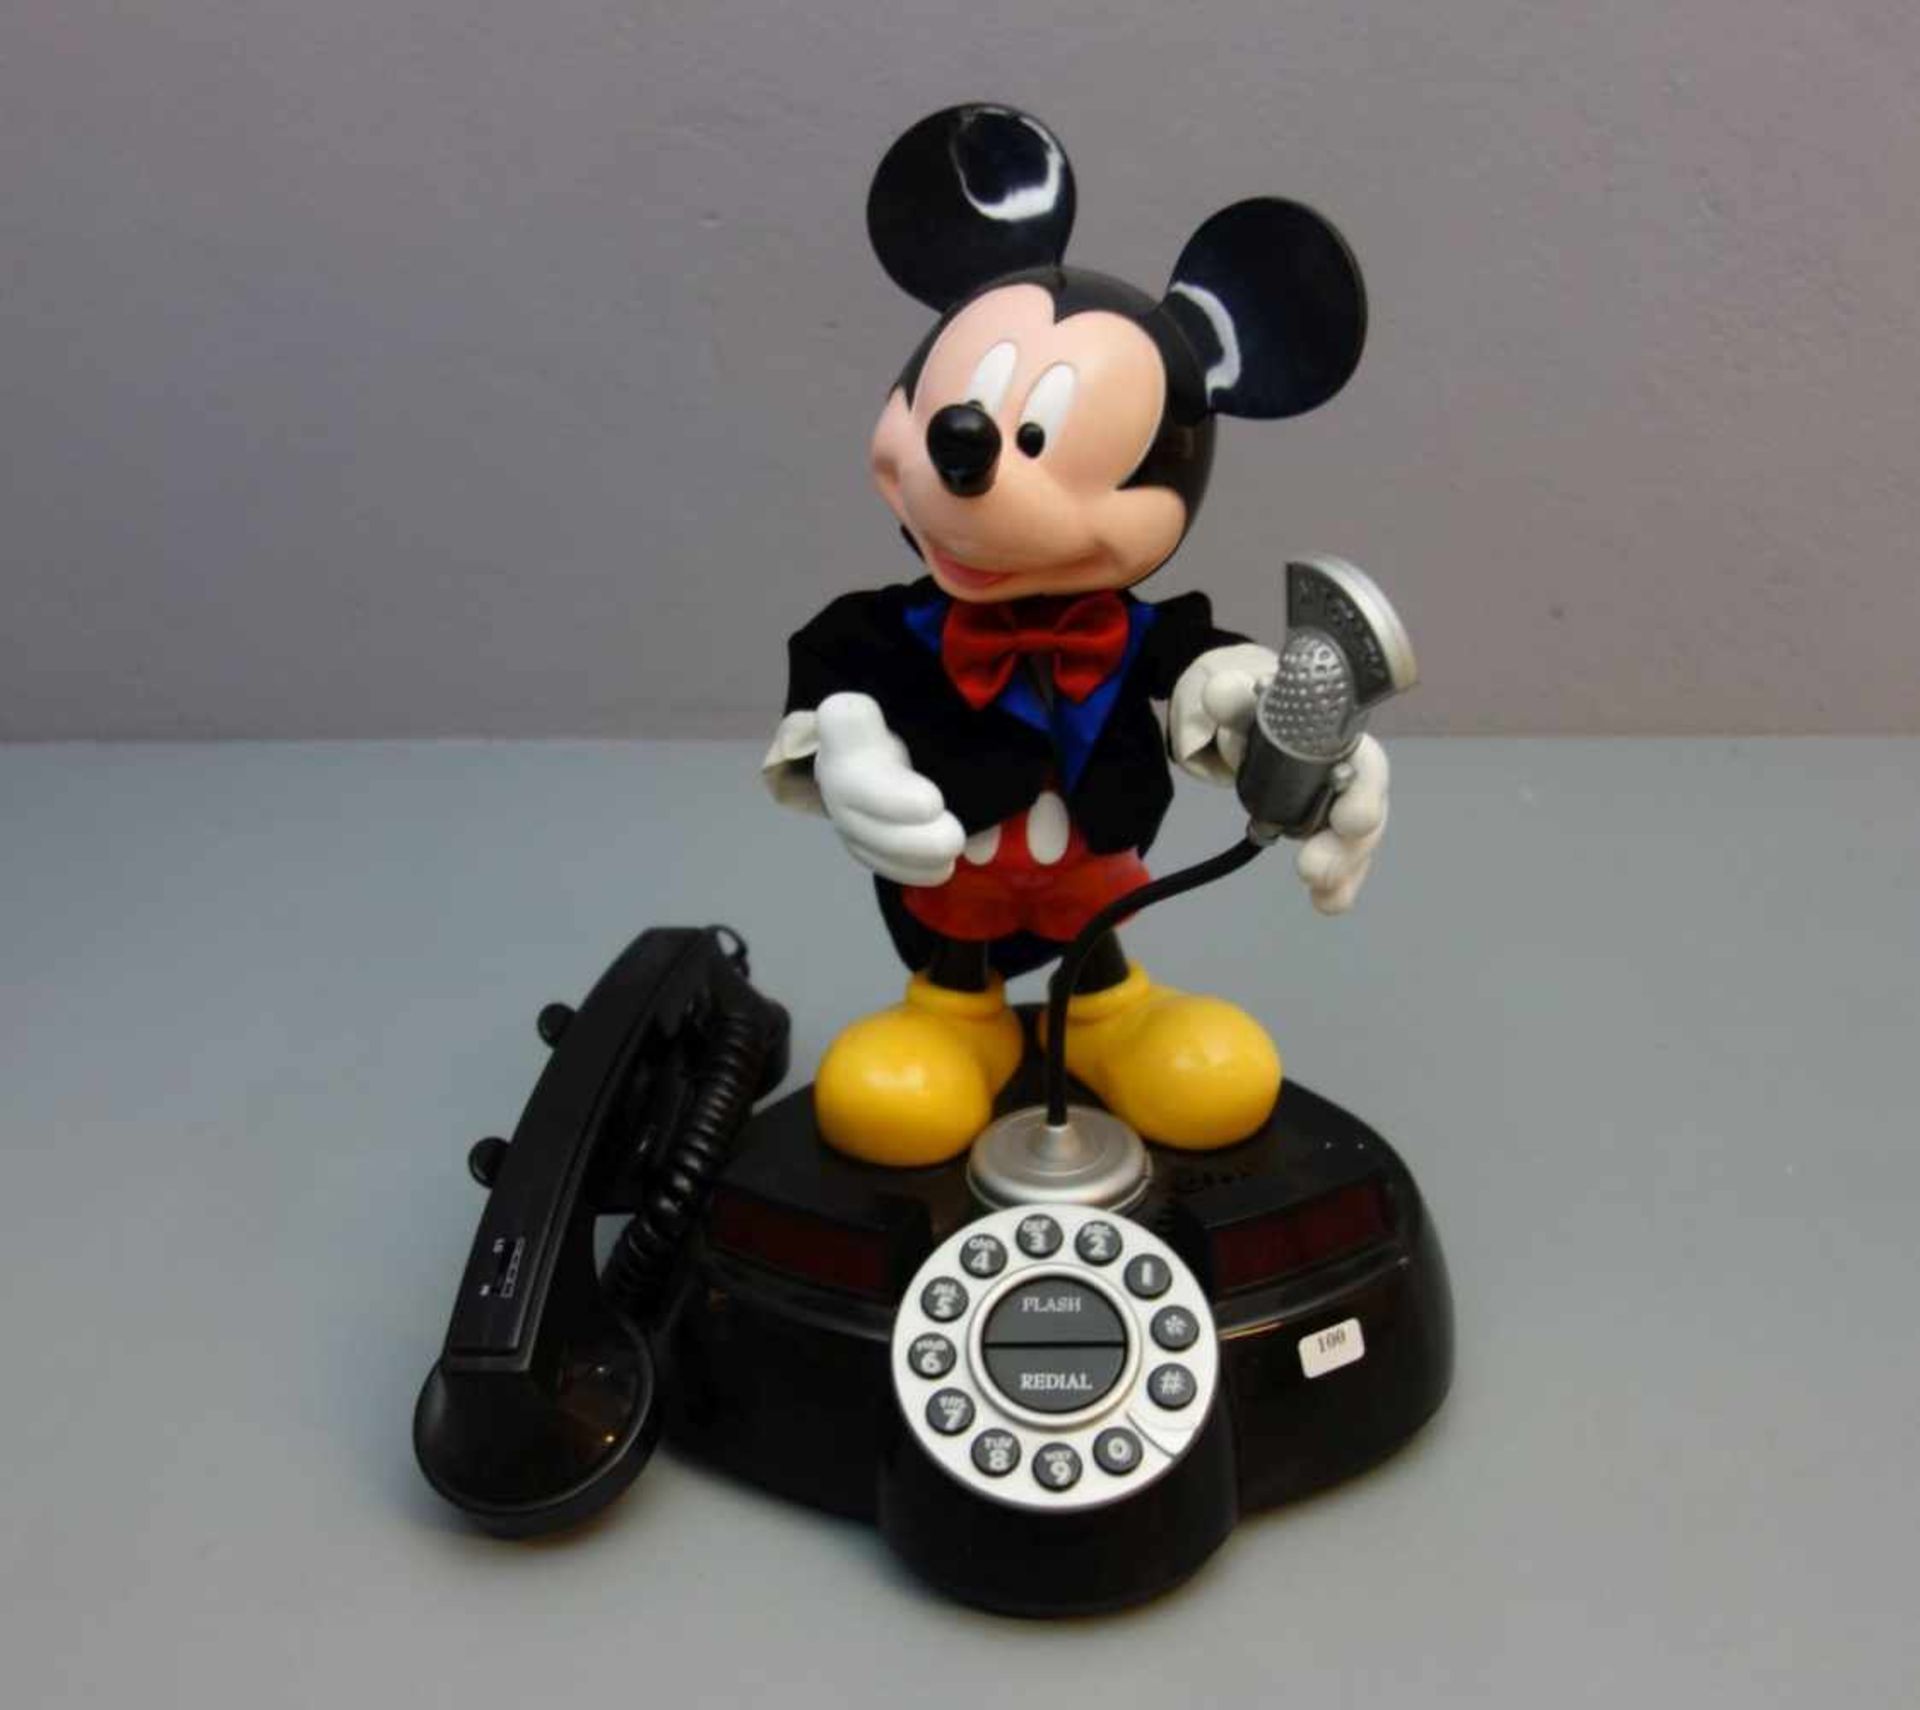 MICKEY MAUS - TELEFON / M. C. Mickey Animated Talking Telephone, "Telemania - a segan product", Walt